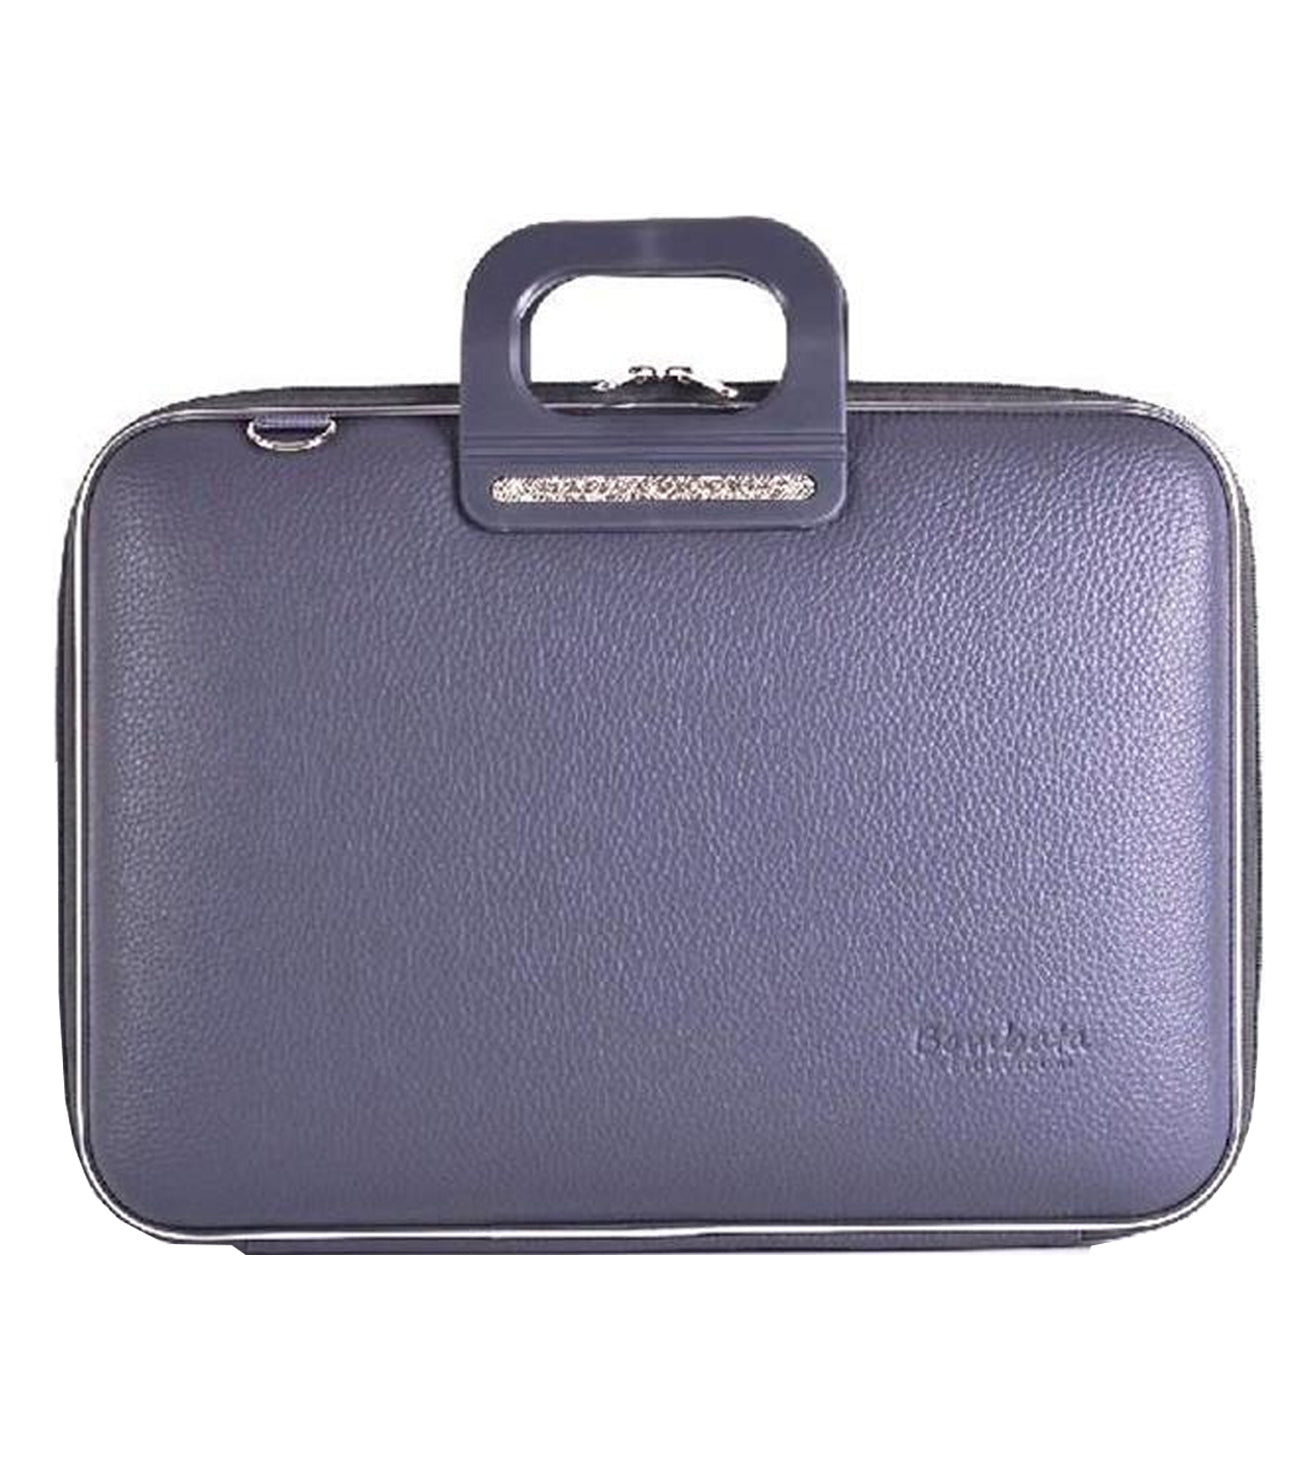 Firenze Classic Laptop Briefcase